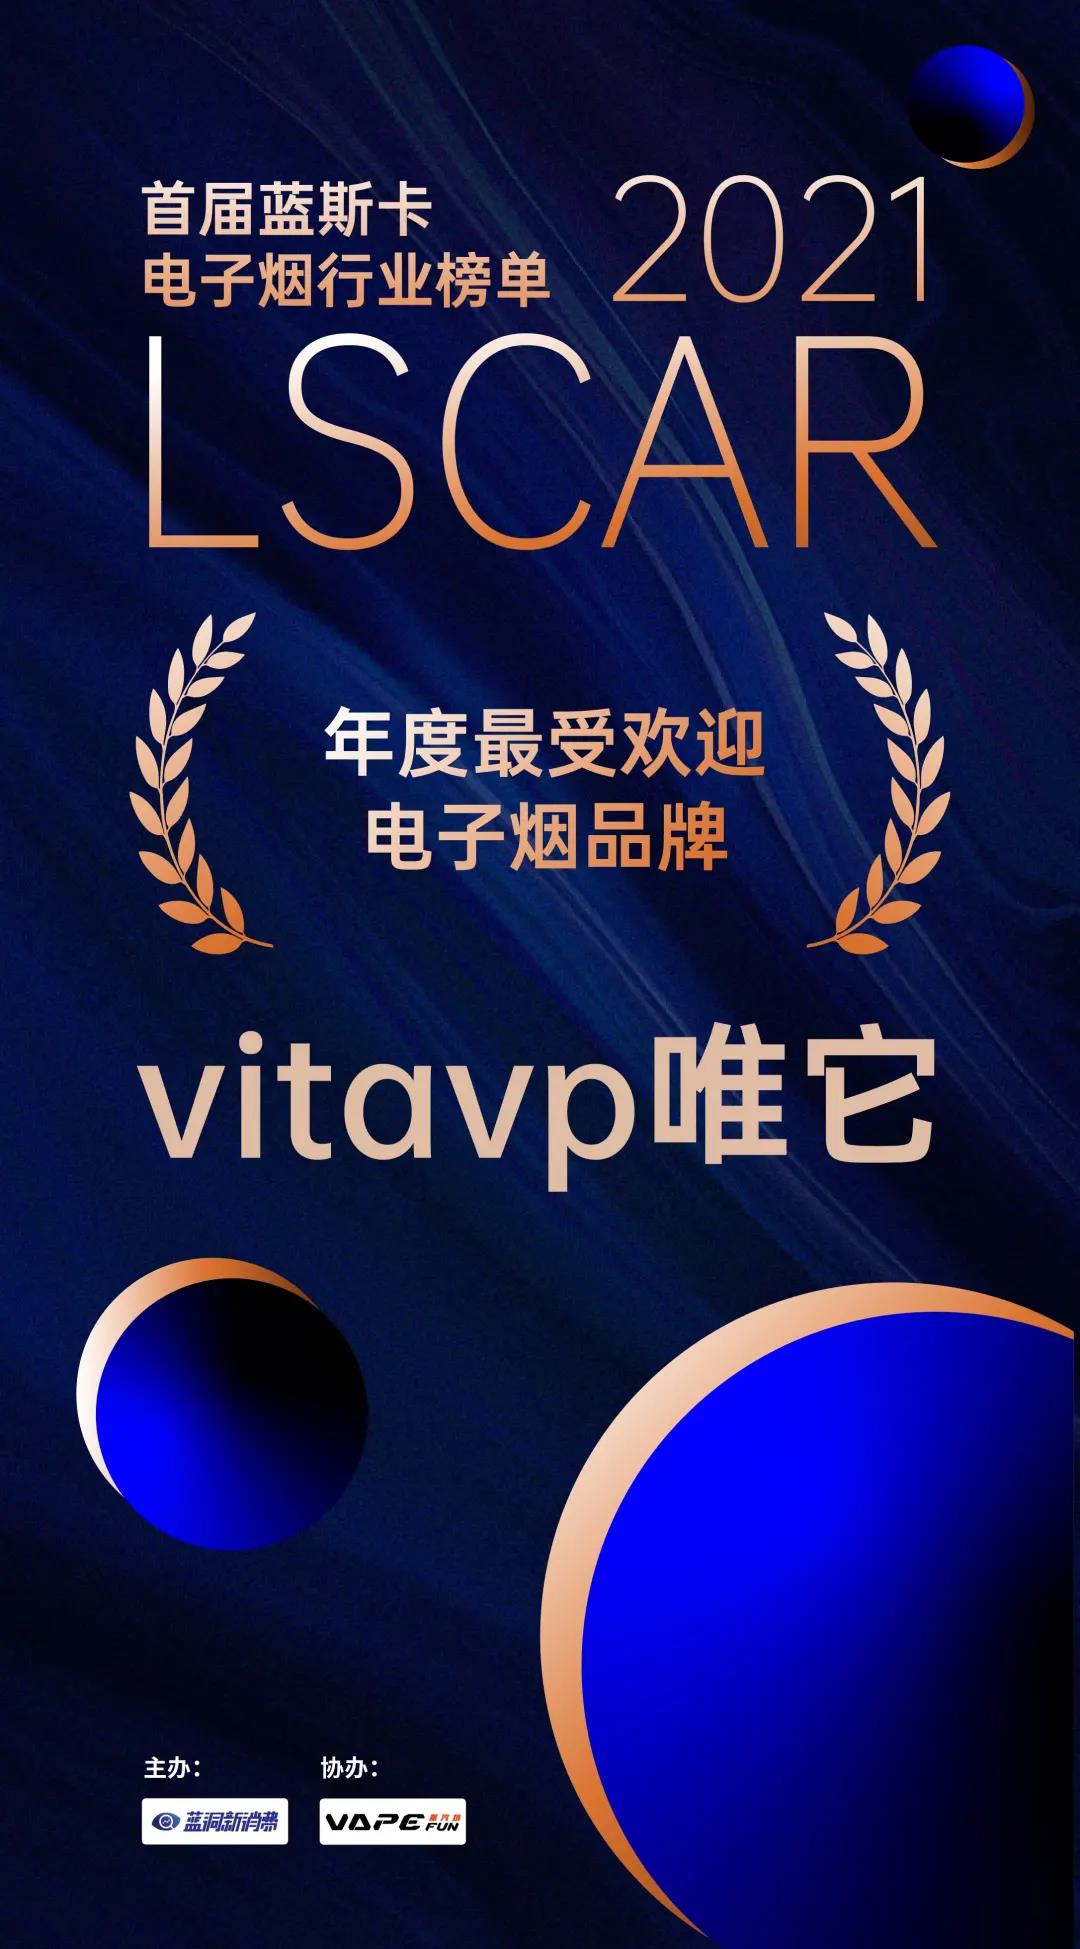 vitavp唯它电子烟获得年度最受欢迎、年度新锐电子烟品牌双奖杯